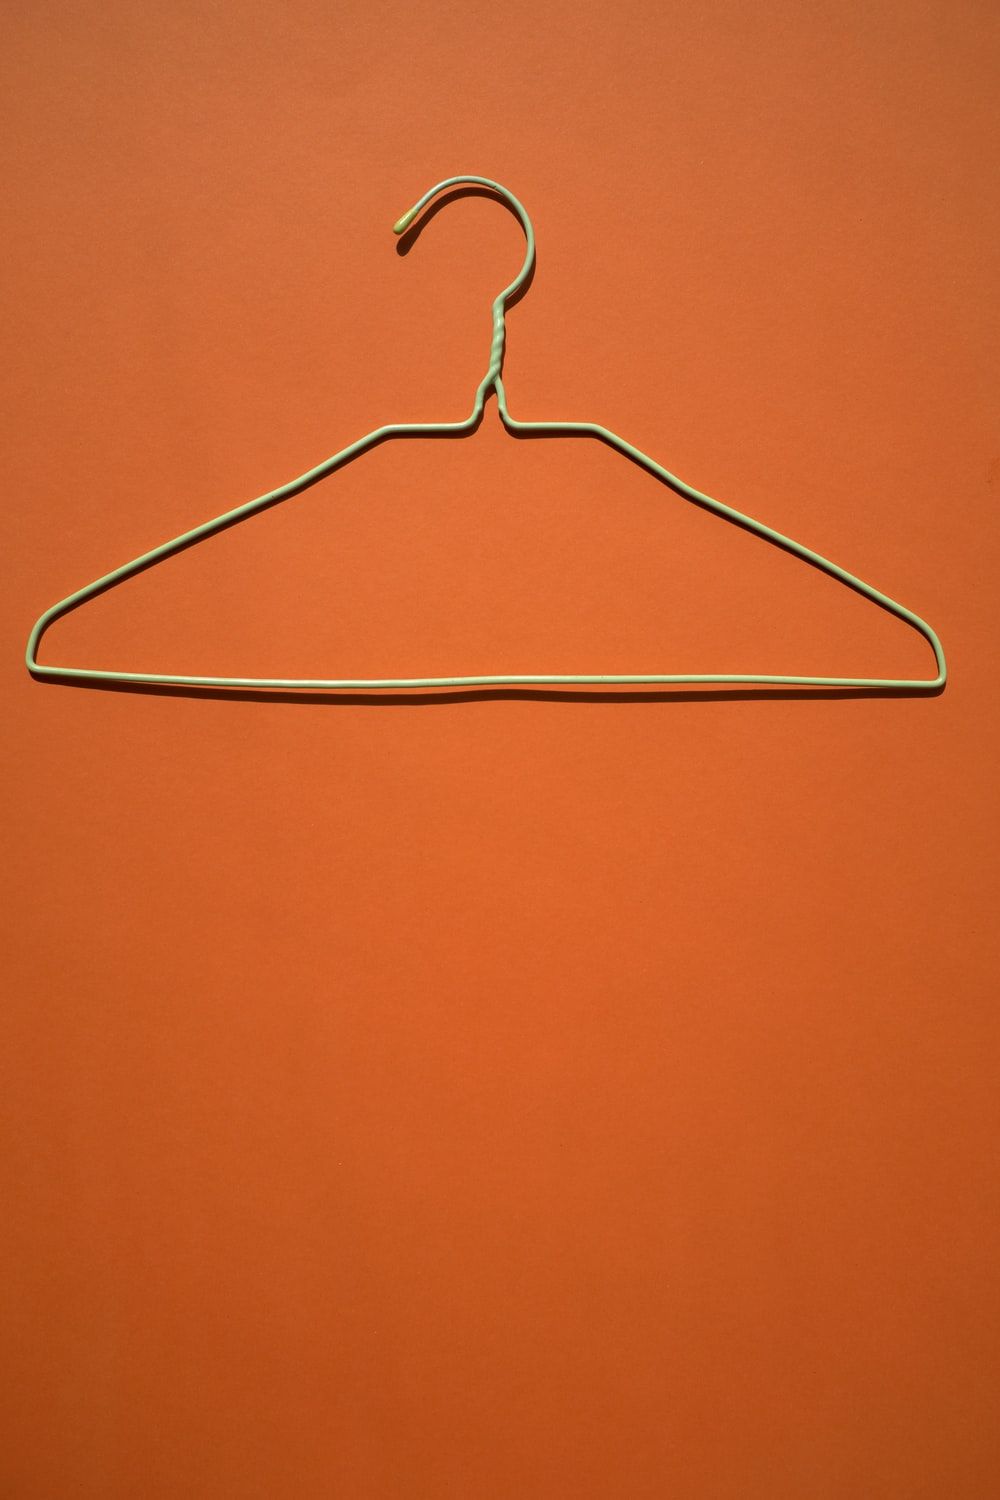 Clothes Hanger Picture. Download .com